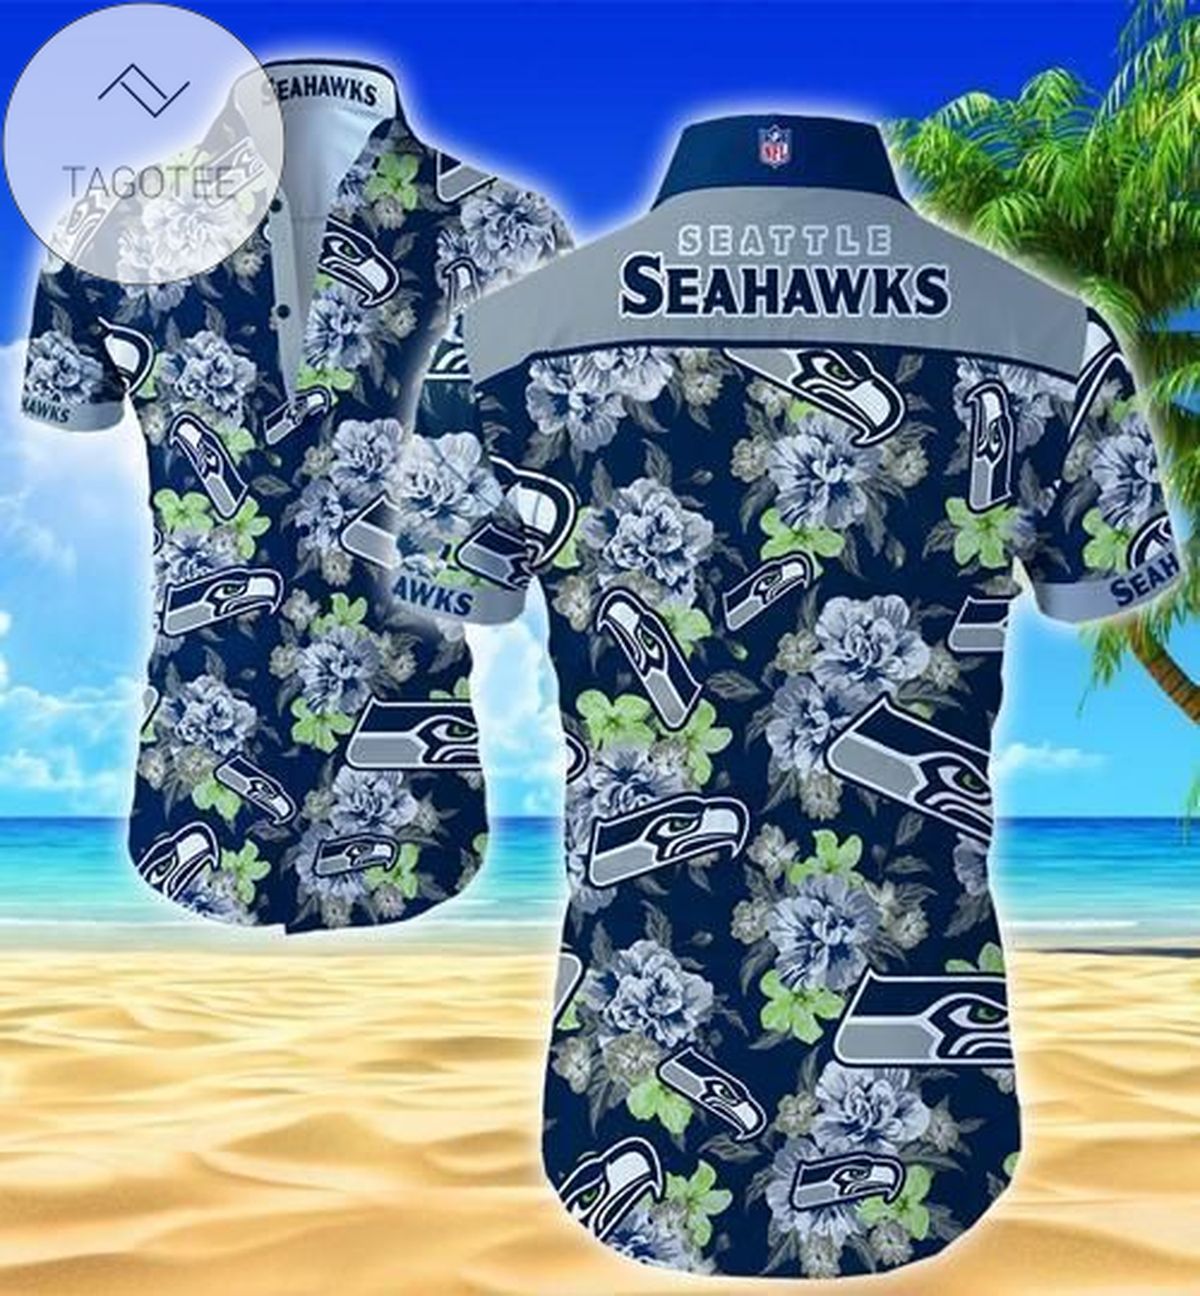 Seattle Seahawks 2 Hawaii Fit Body Shirt